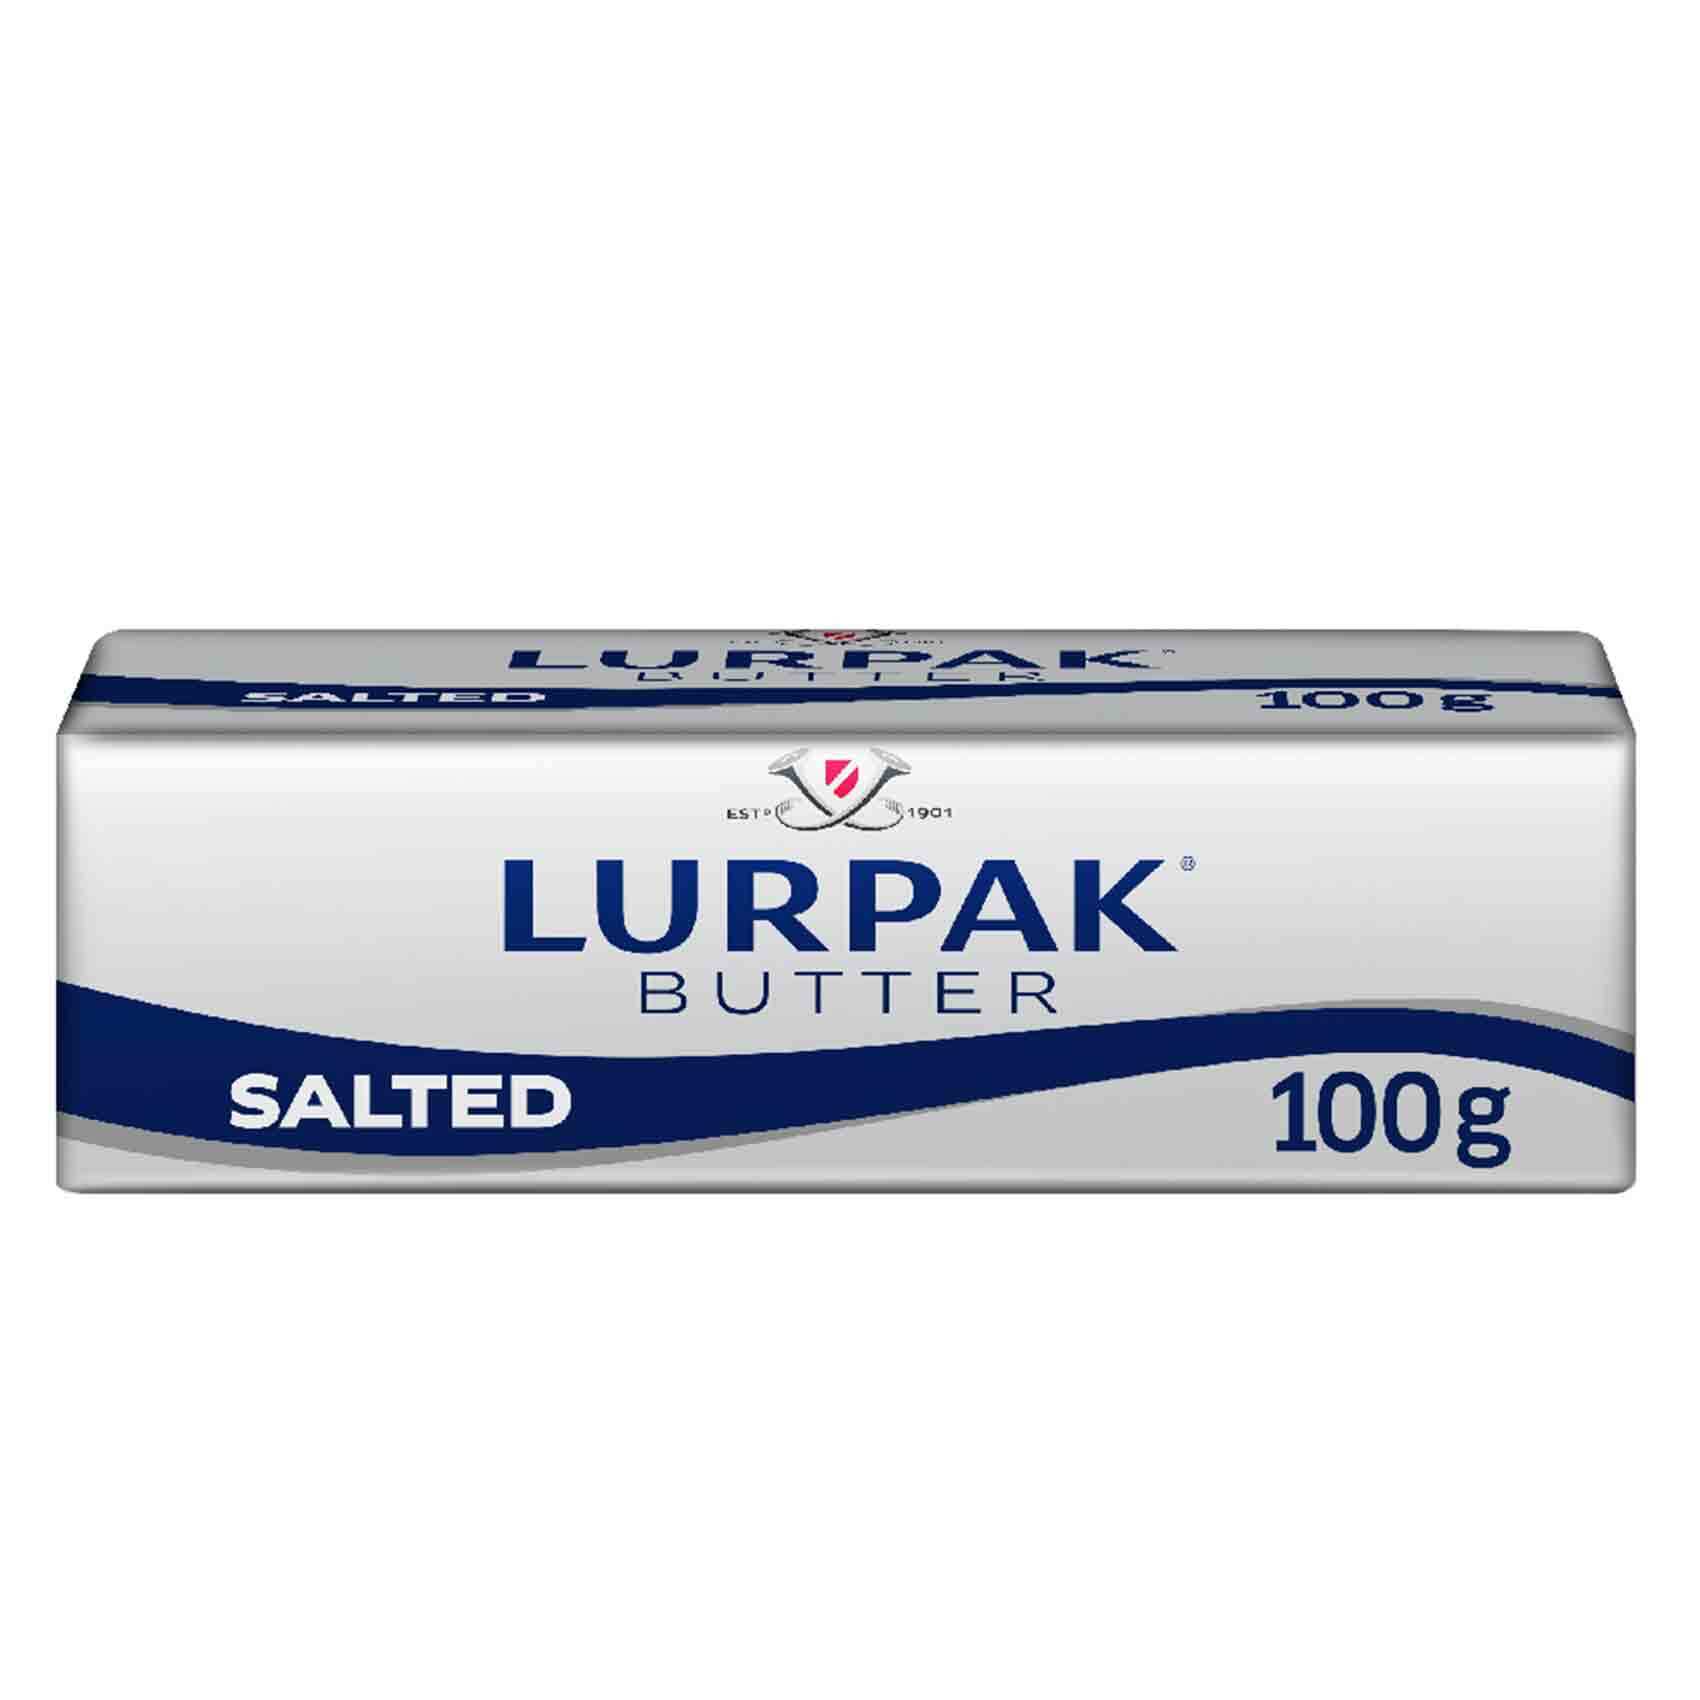 Lurpak Soft Butter Unsalted 200 g Online at Best Price